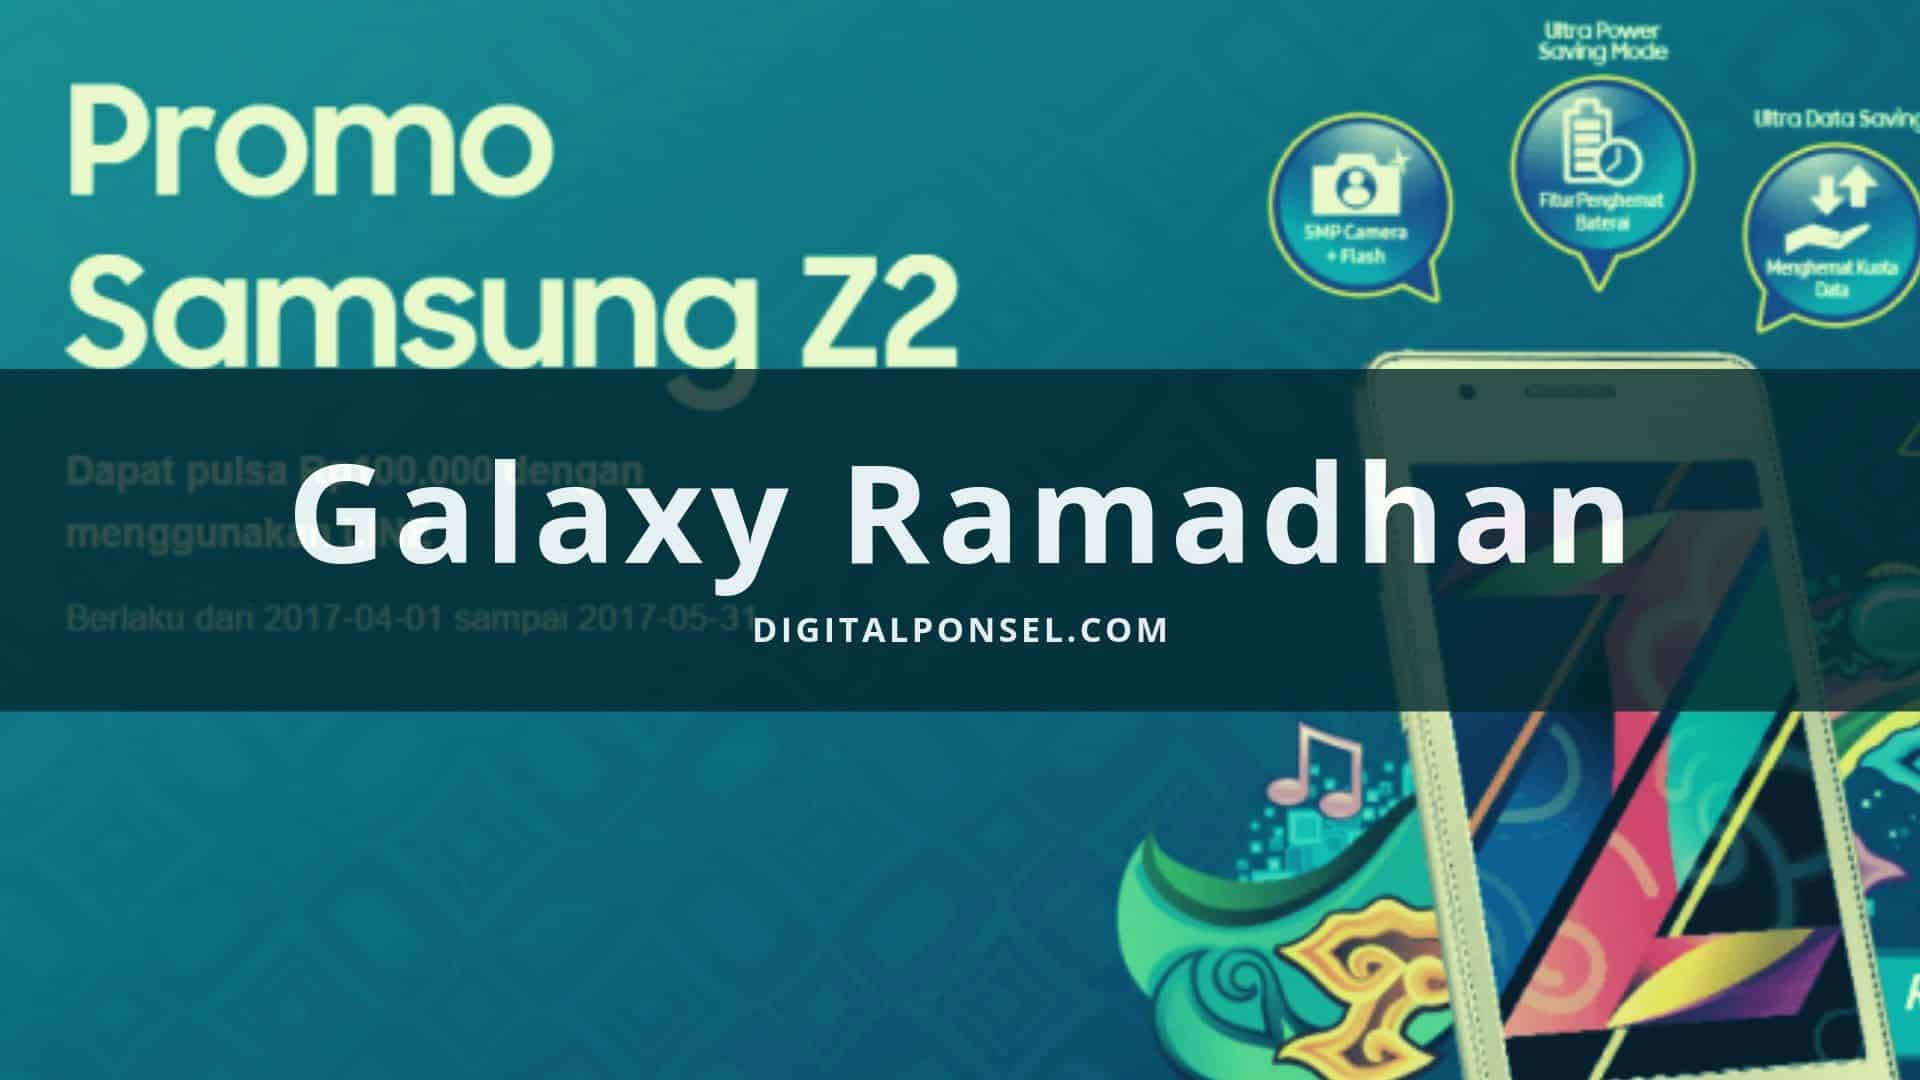 Daftar Promo HP Samsung Galaxy Ramadhan